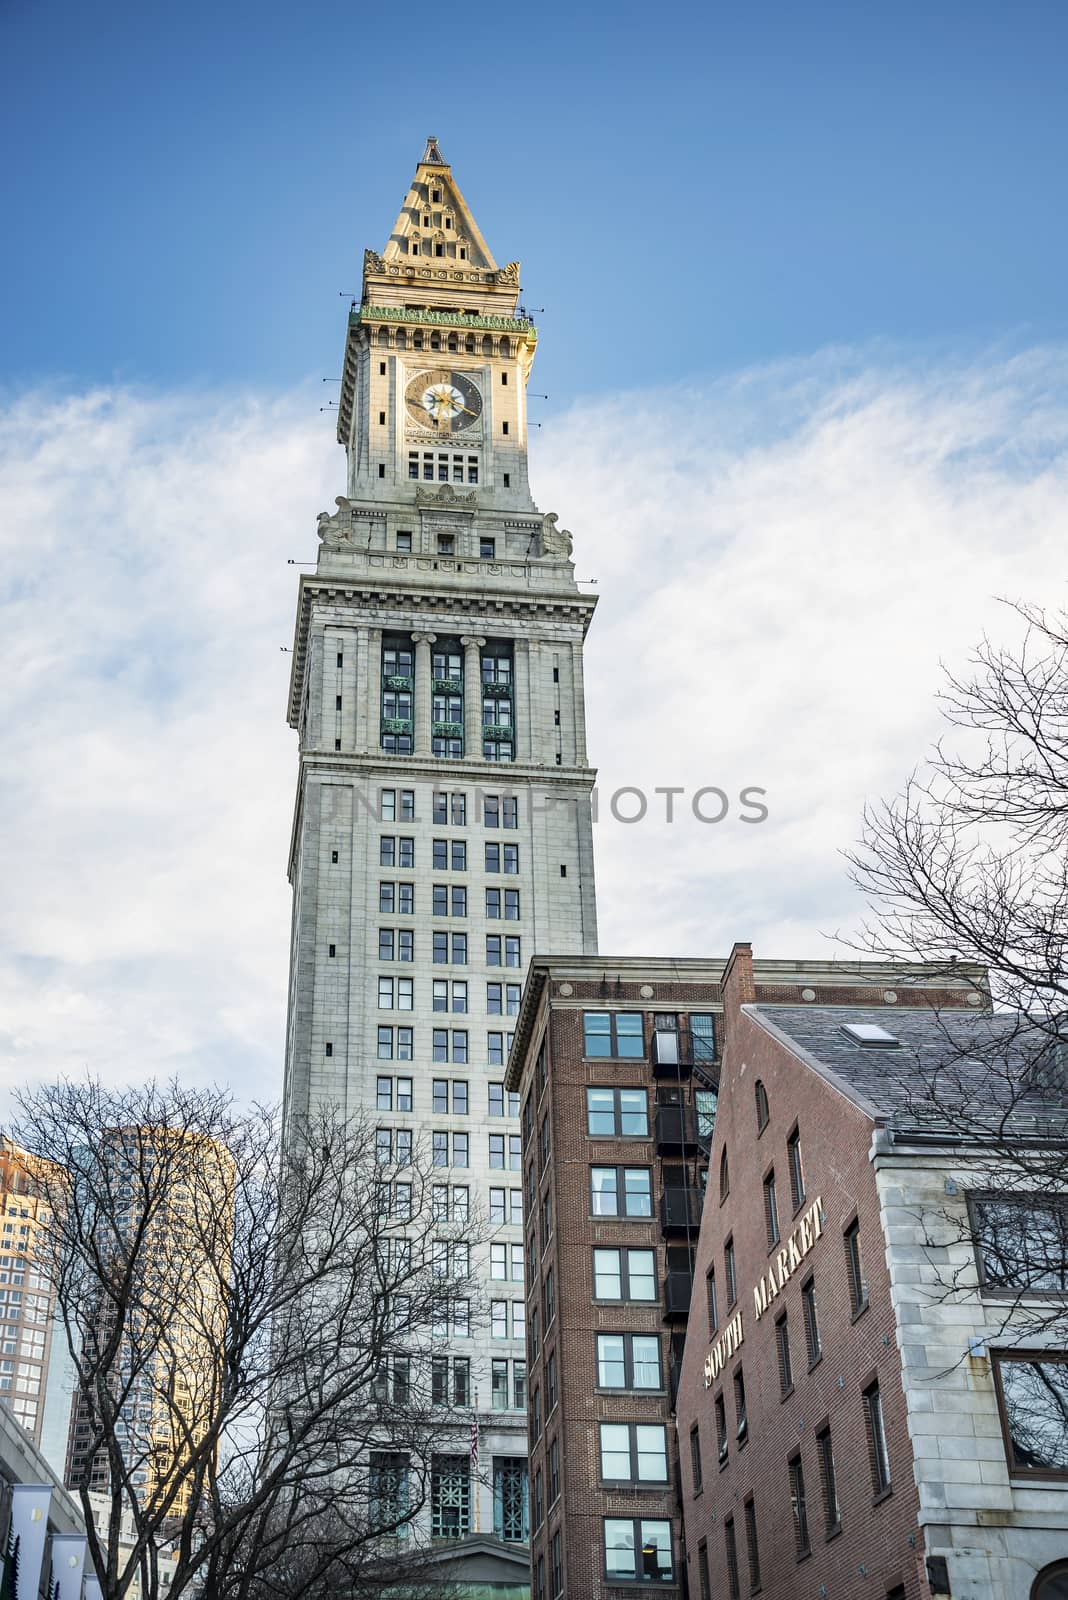 Boston Skyline and Custom House Tower, Boston, Massachusetts